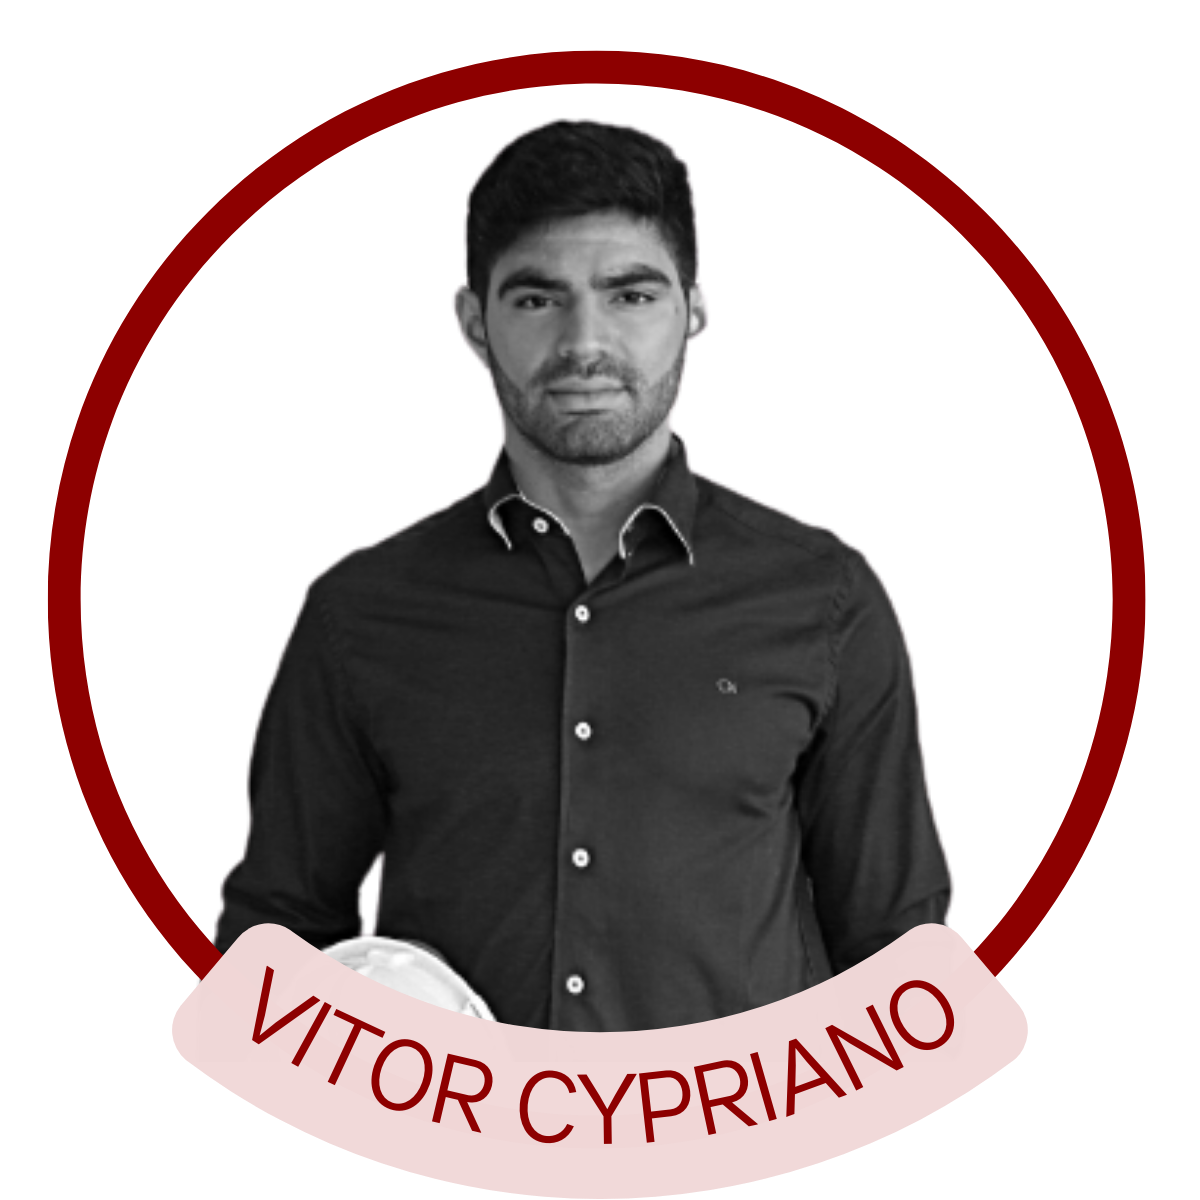 Vitor Cypriano